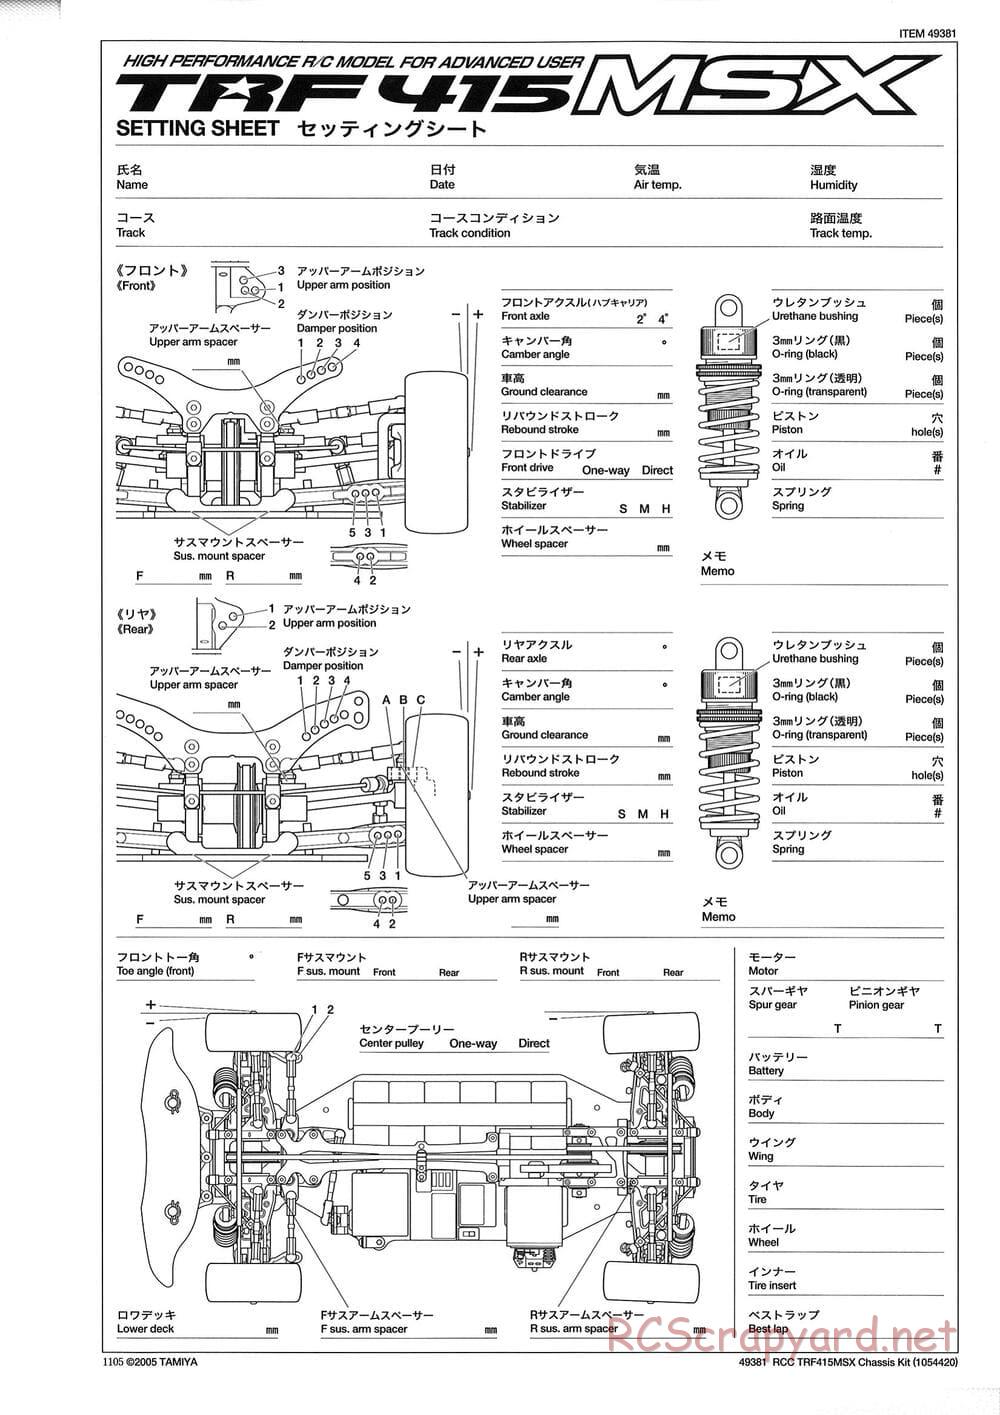 Tamiya - TRF415-MSX Chassis - Manual - Page 29